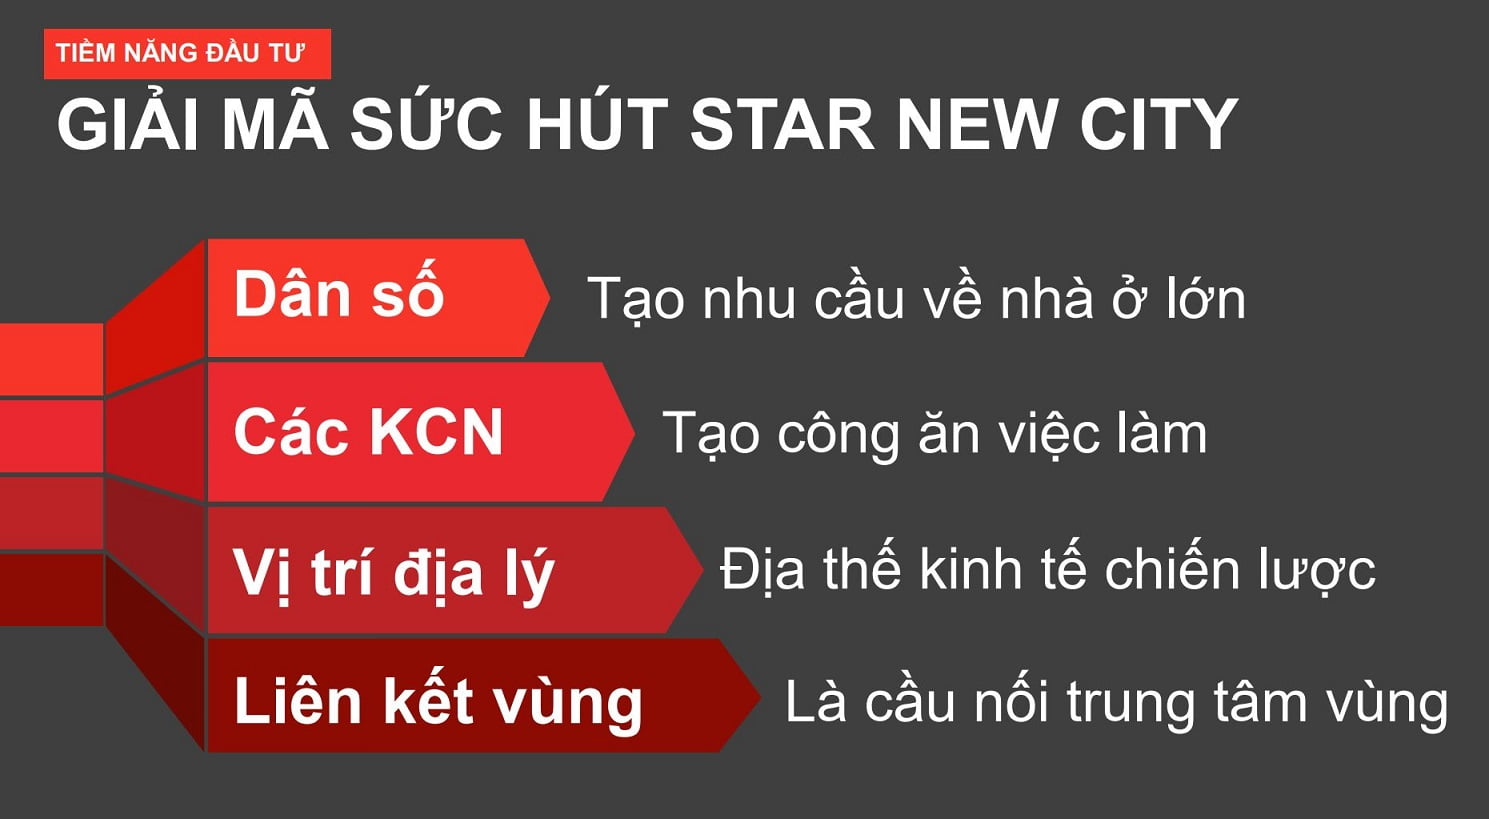 star new city tiem nang dau tu